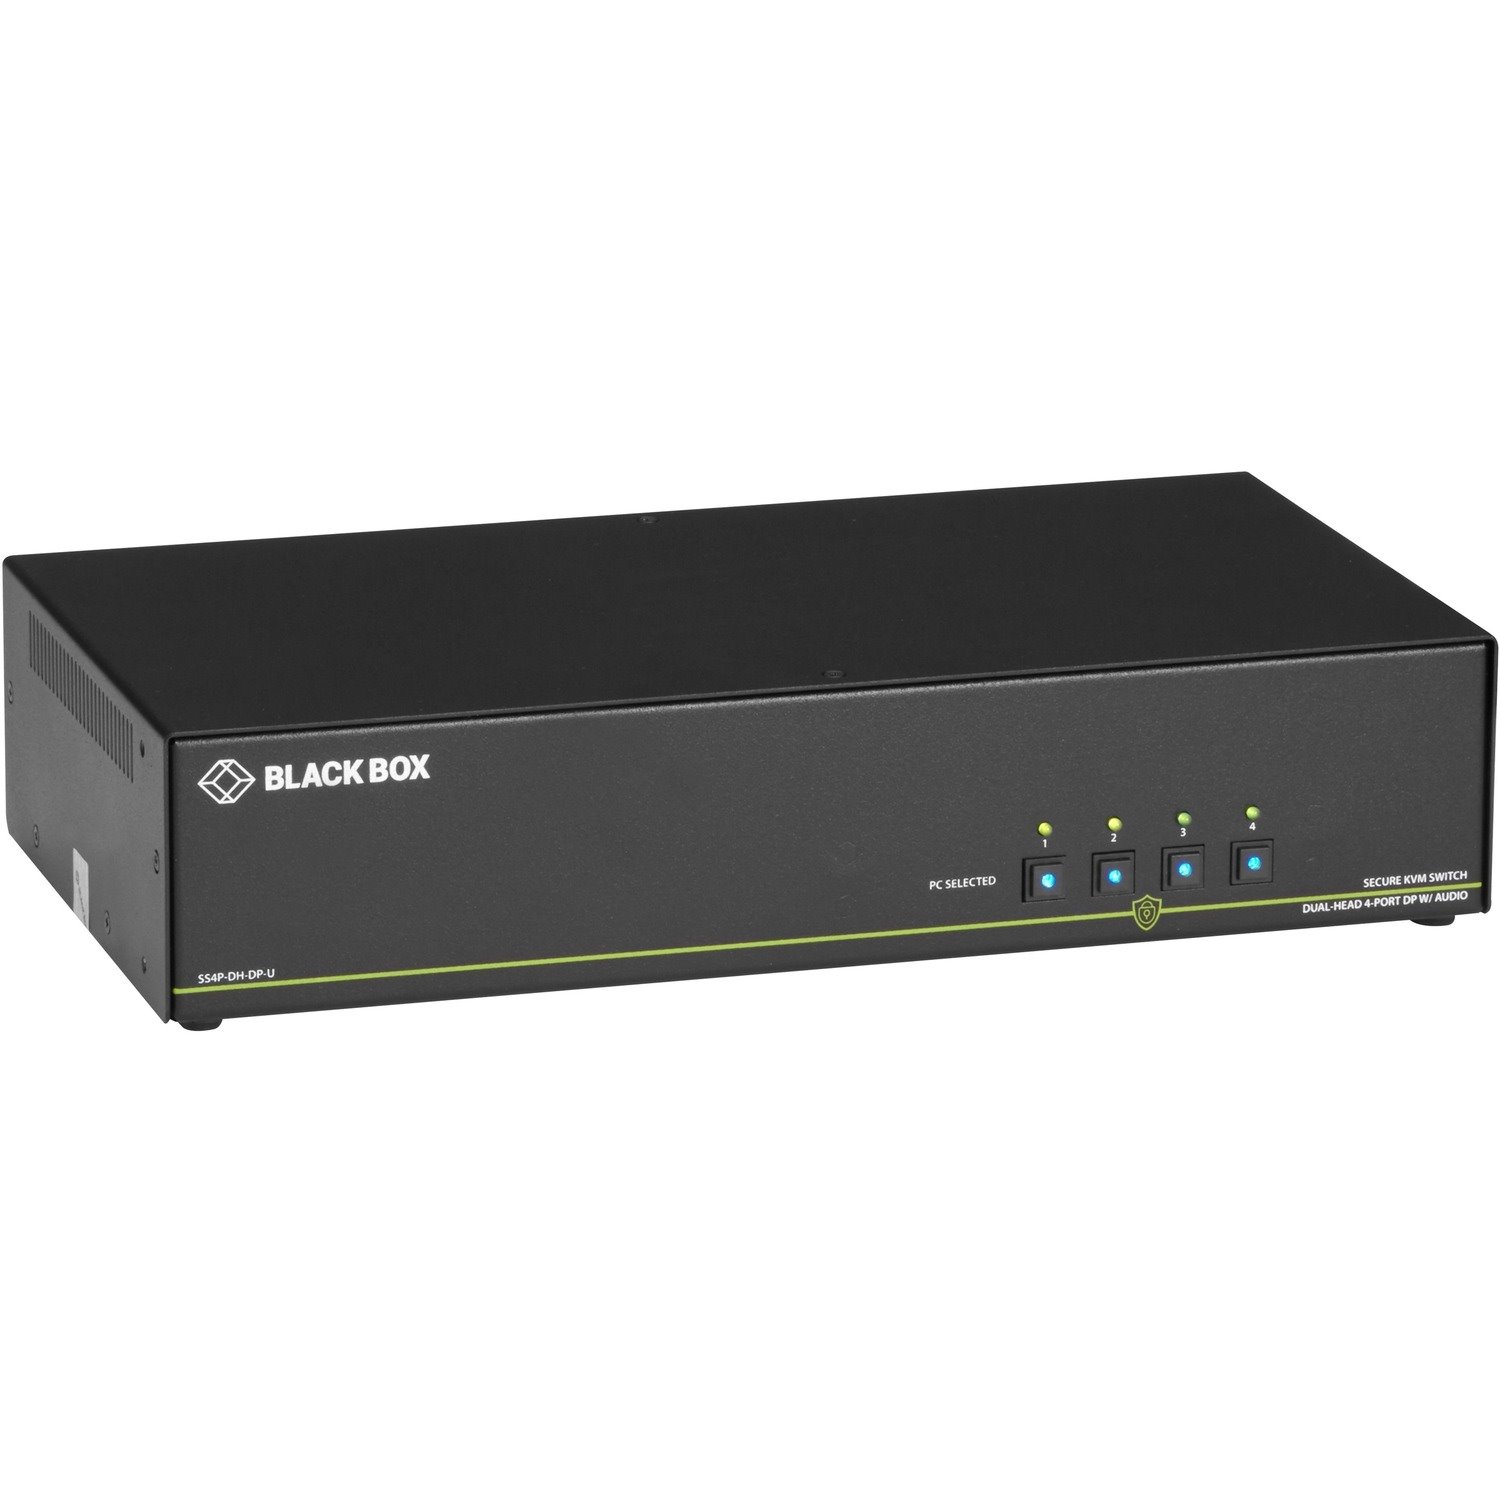 Black Box NIAP 3.0 Secure 4-Port Dual-Head HDMI KVM Switch